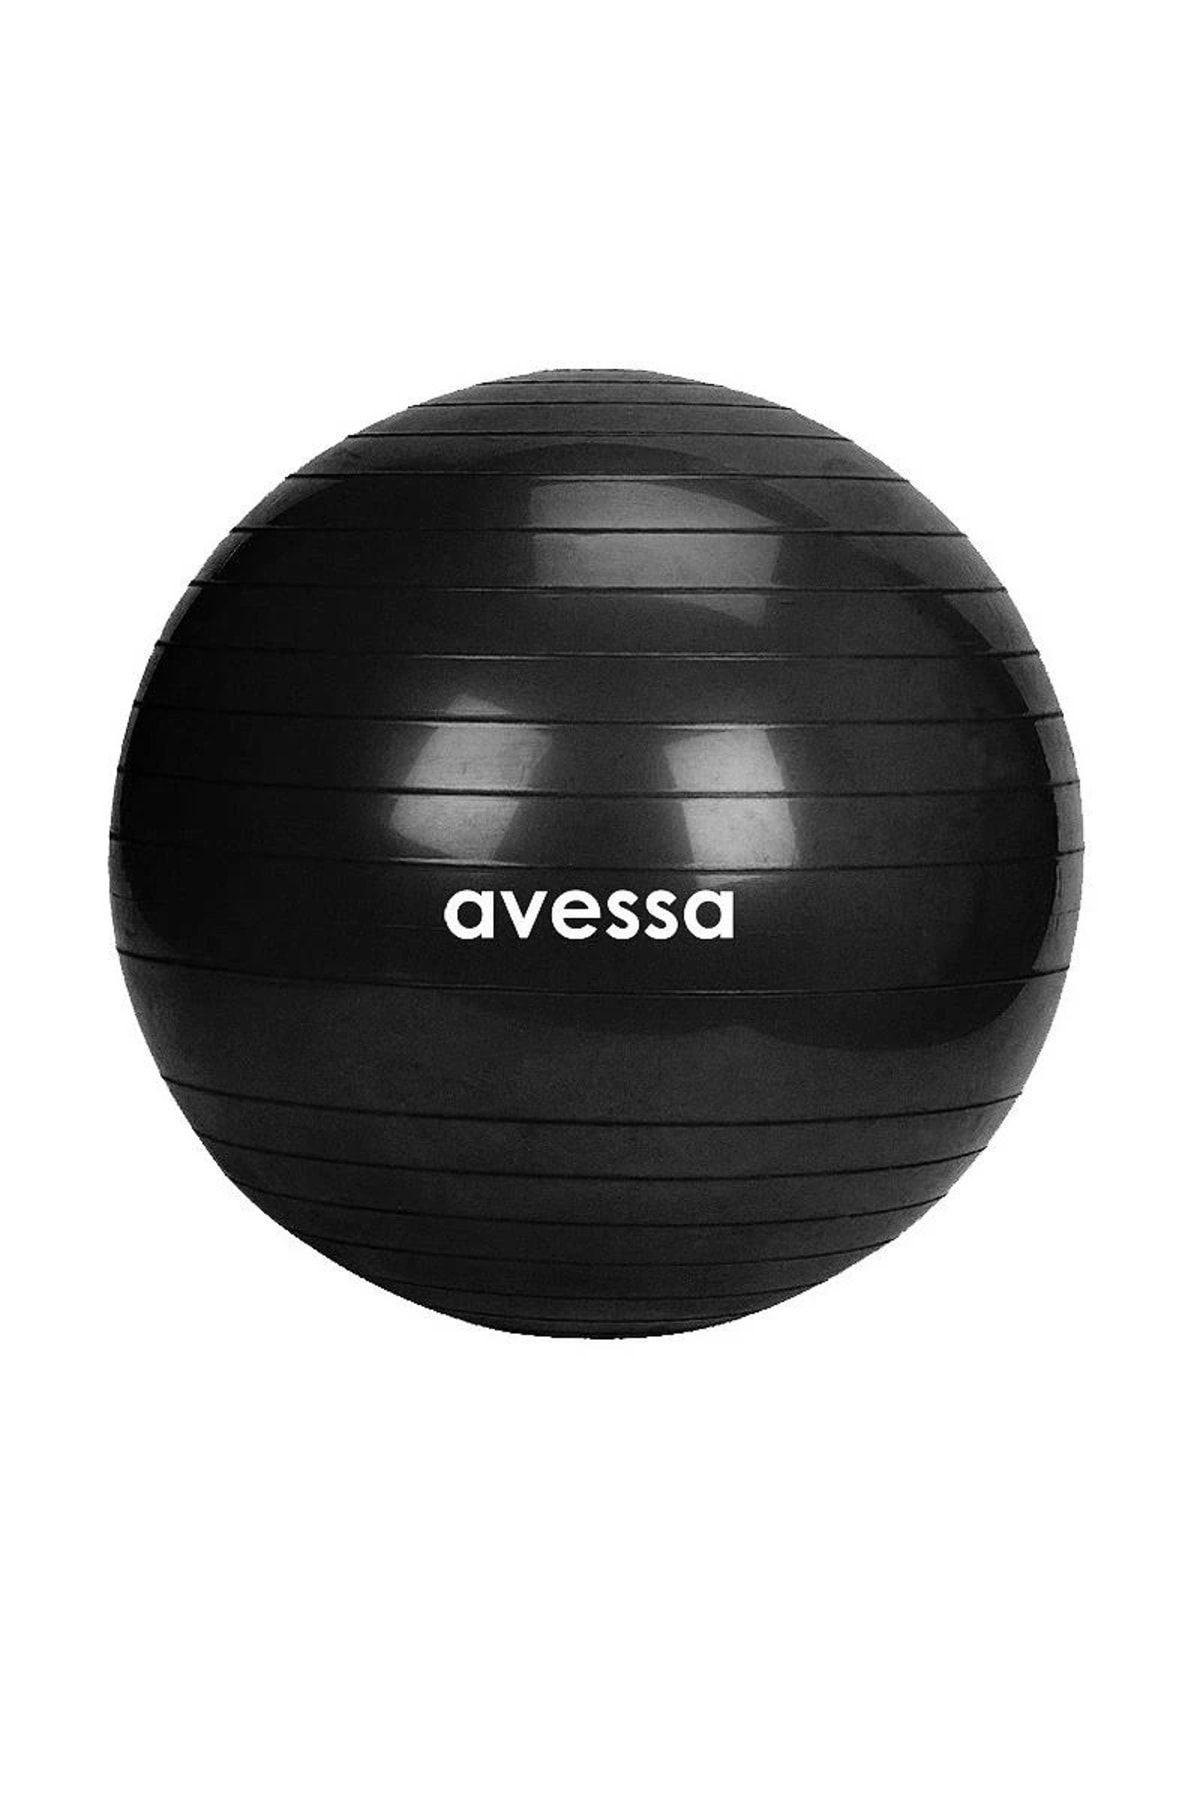 Avessa Bpt-65 65 Cm Dura-strong Yoga Pilates Topu Denge Egzersiz Topu